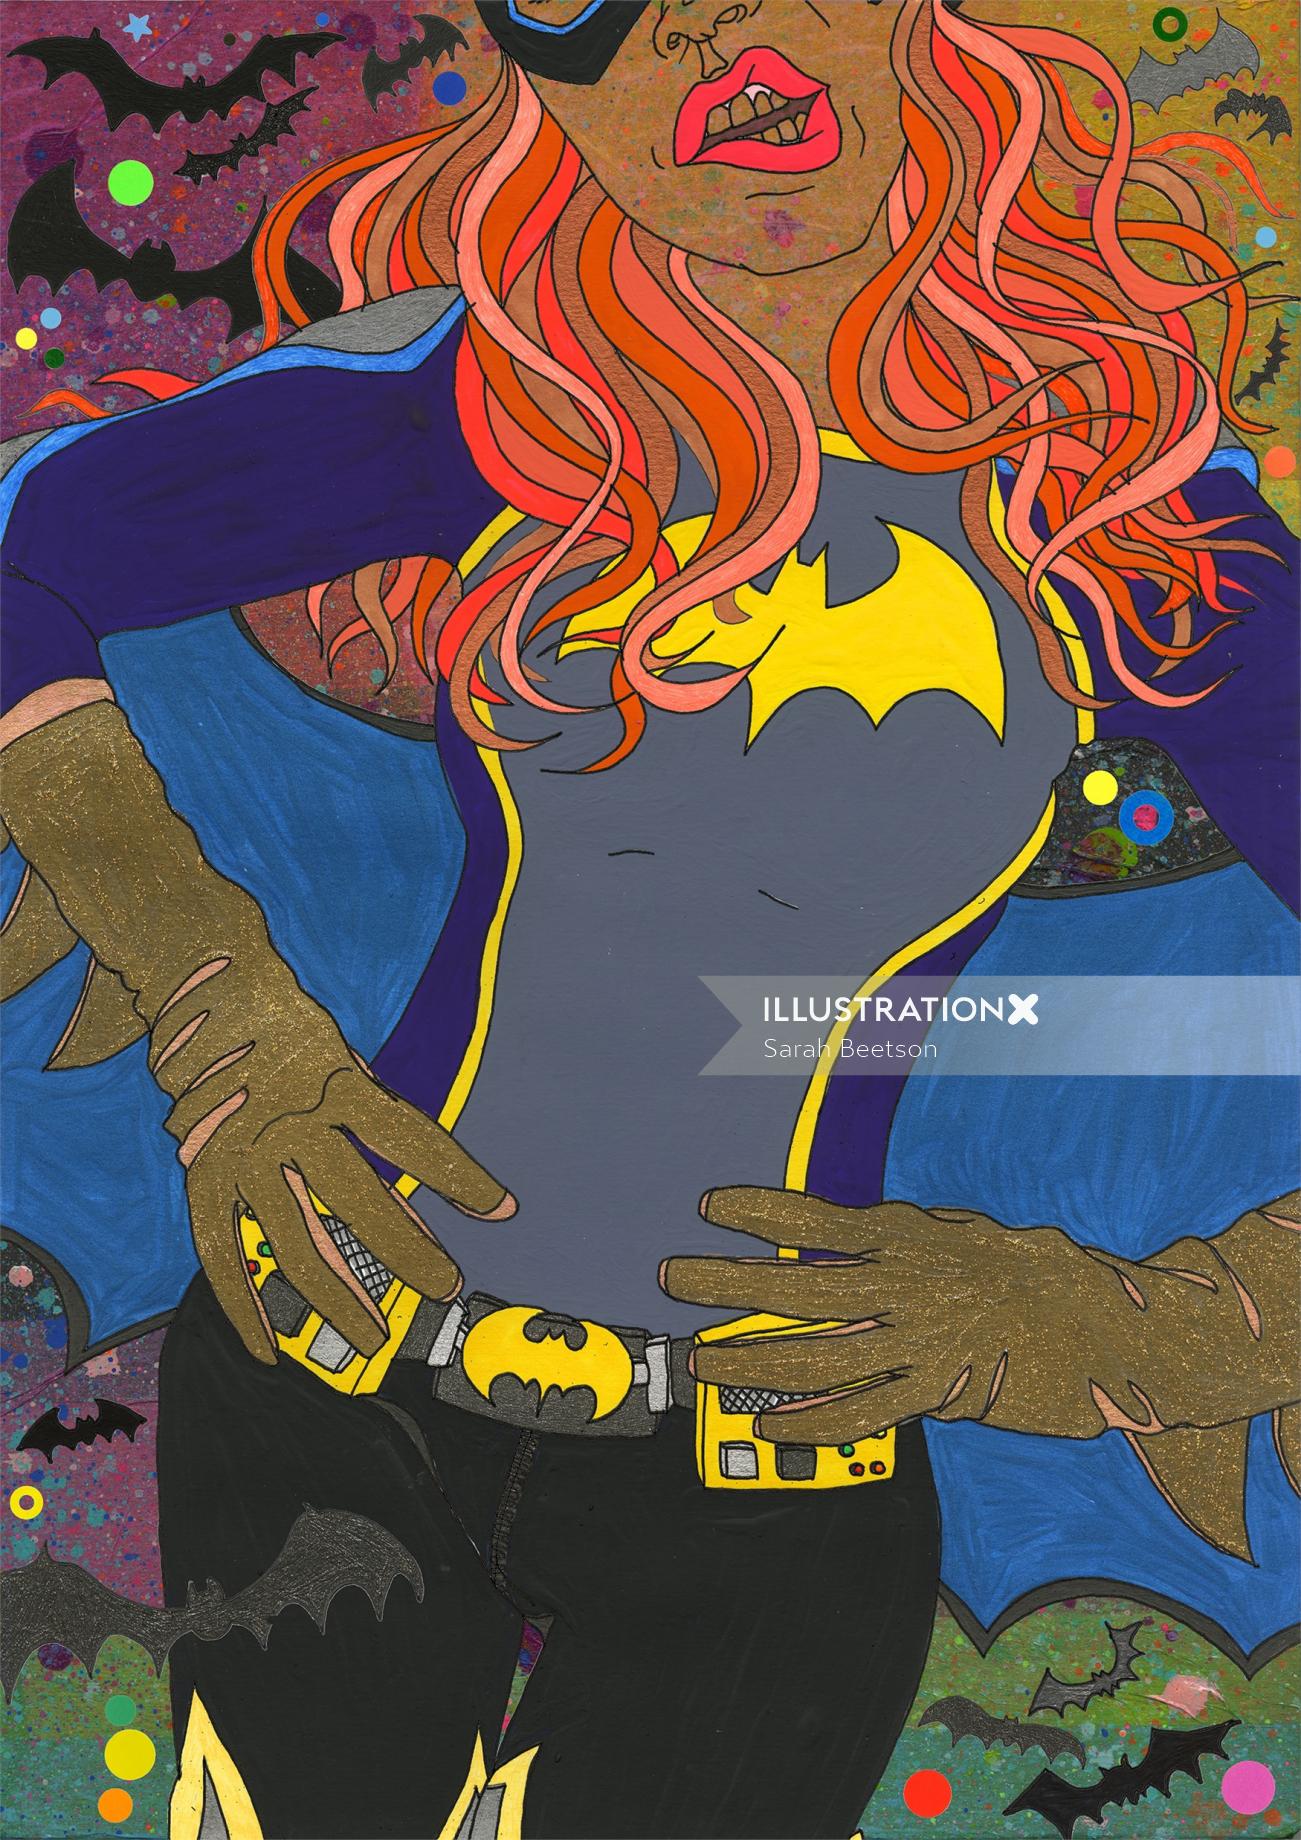 An illustration of a Bat girl